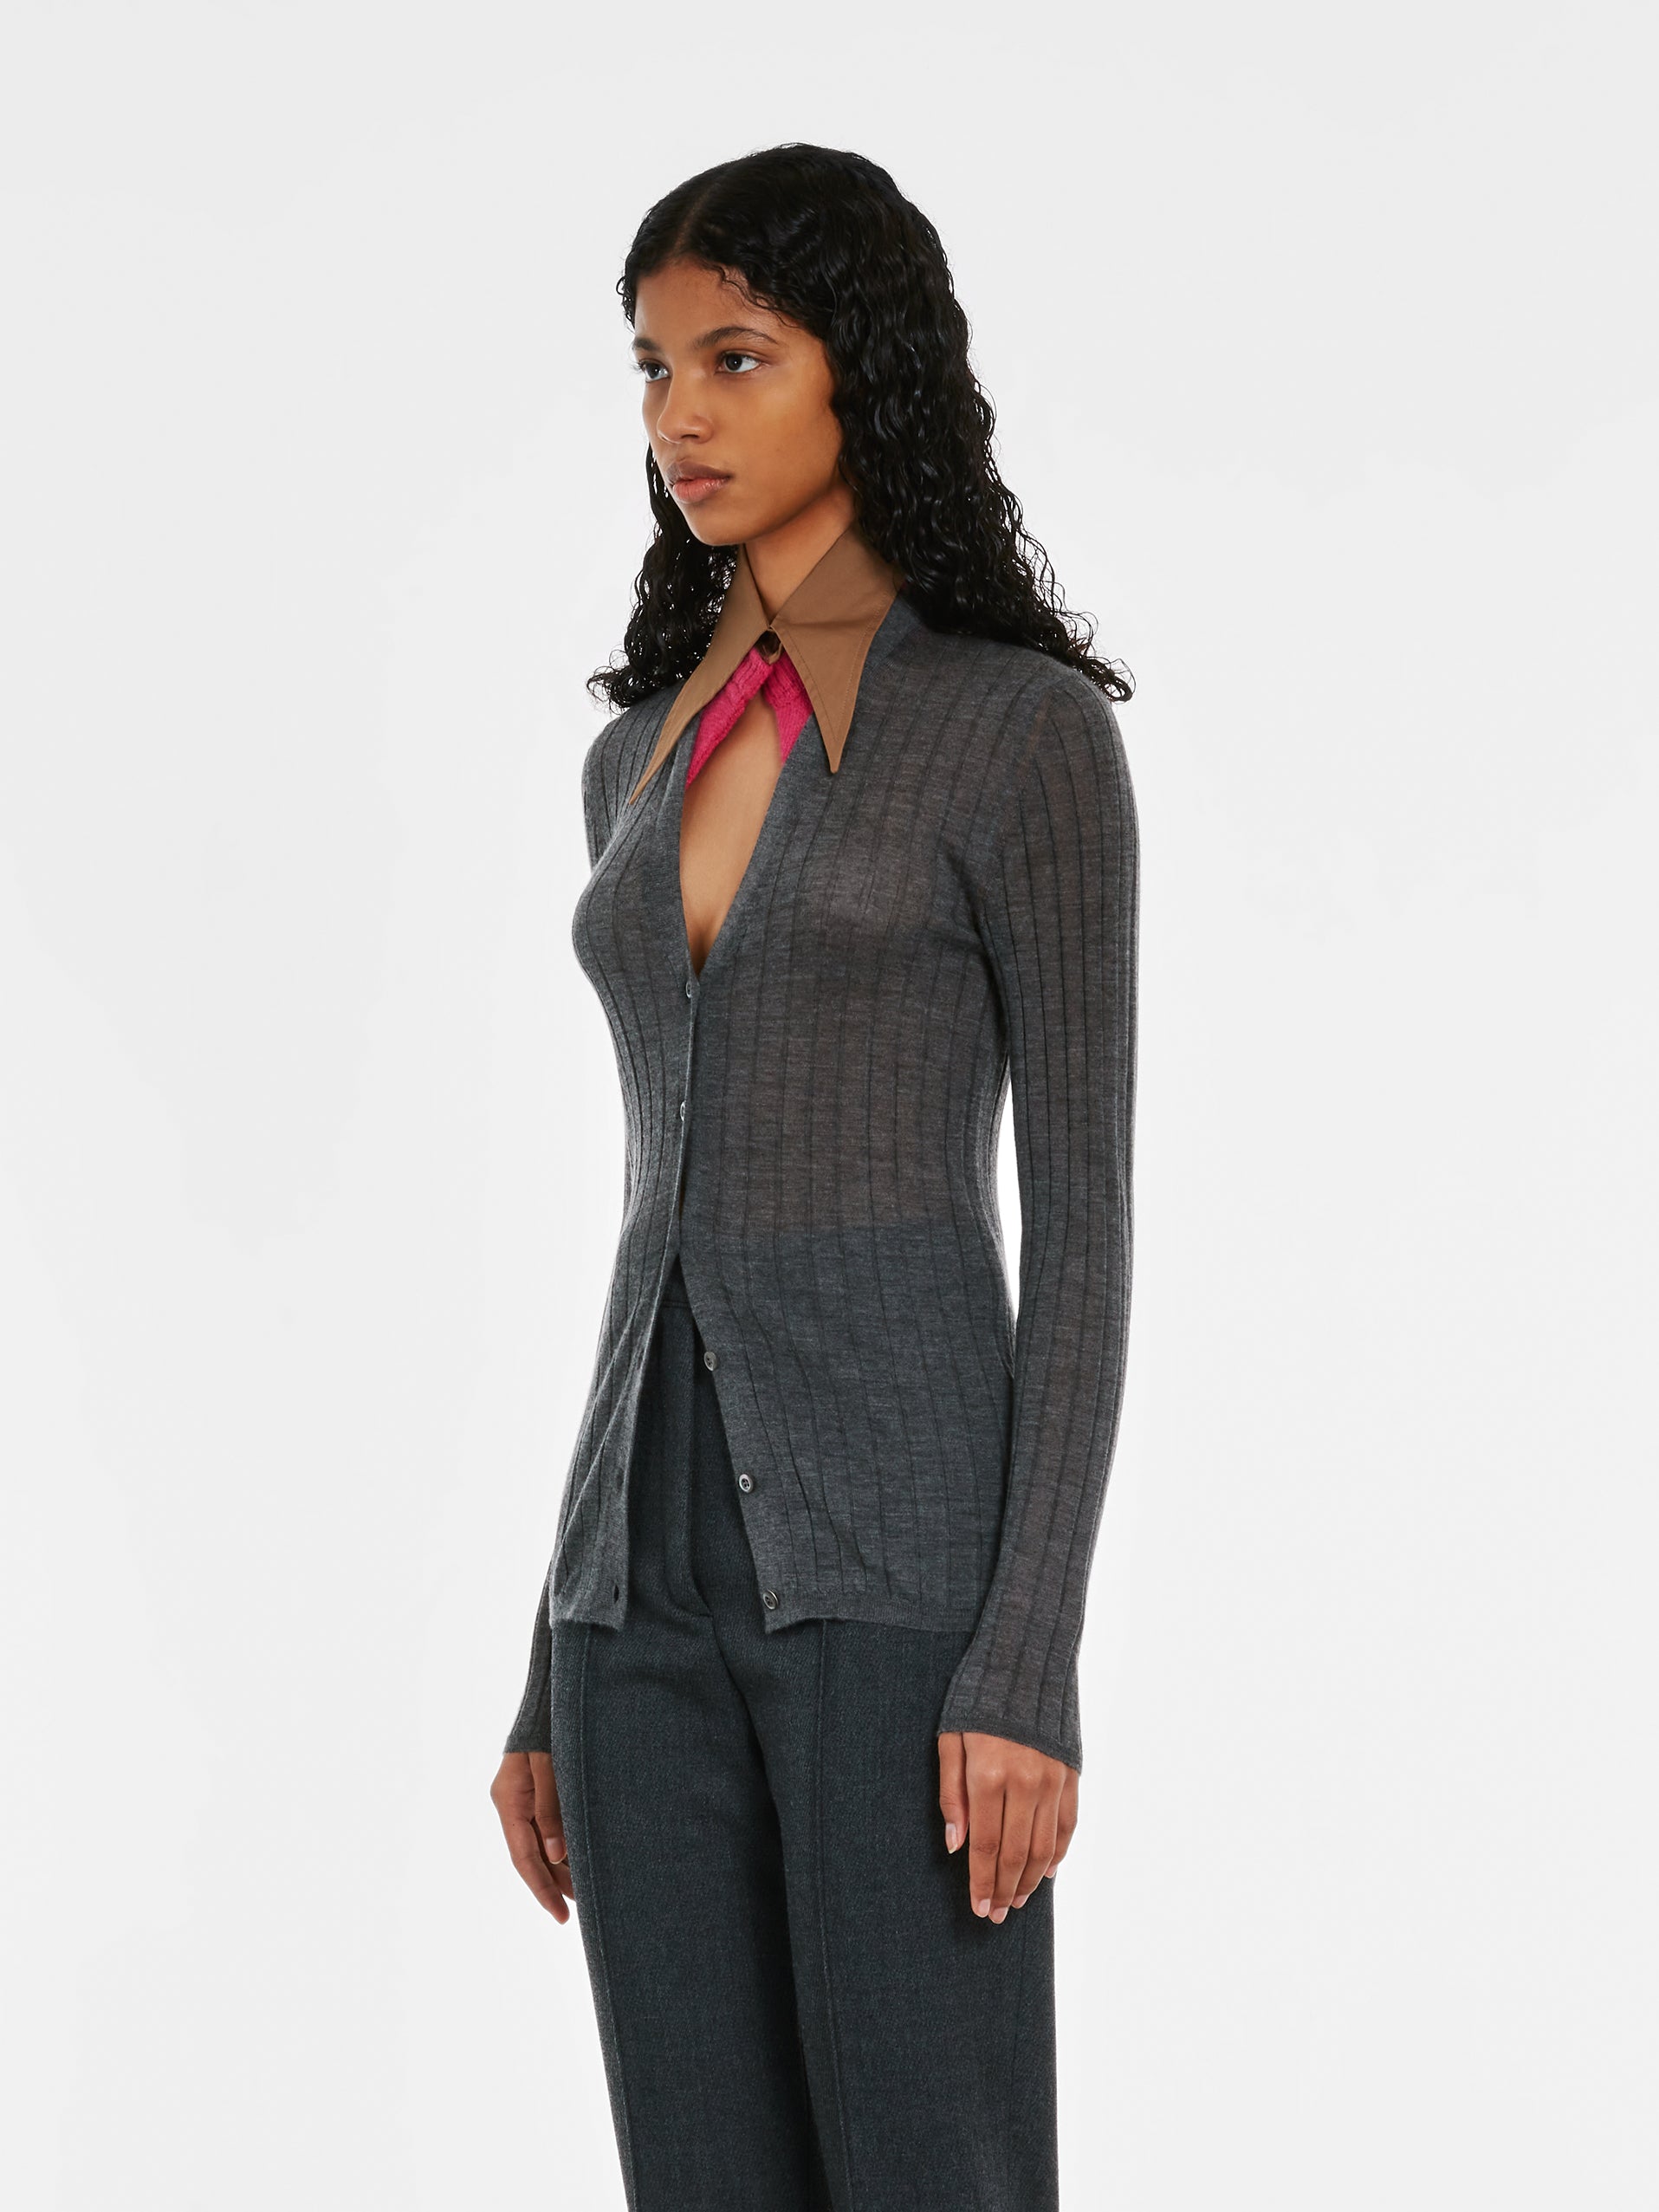 Prada - Women’s Cashmere and Silk Cardigan with Collar - (Slate Grey) view 2